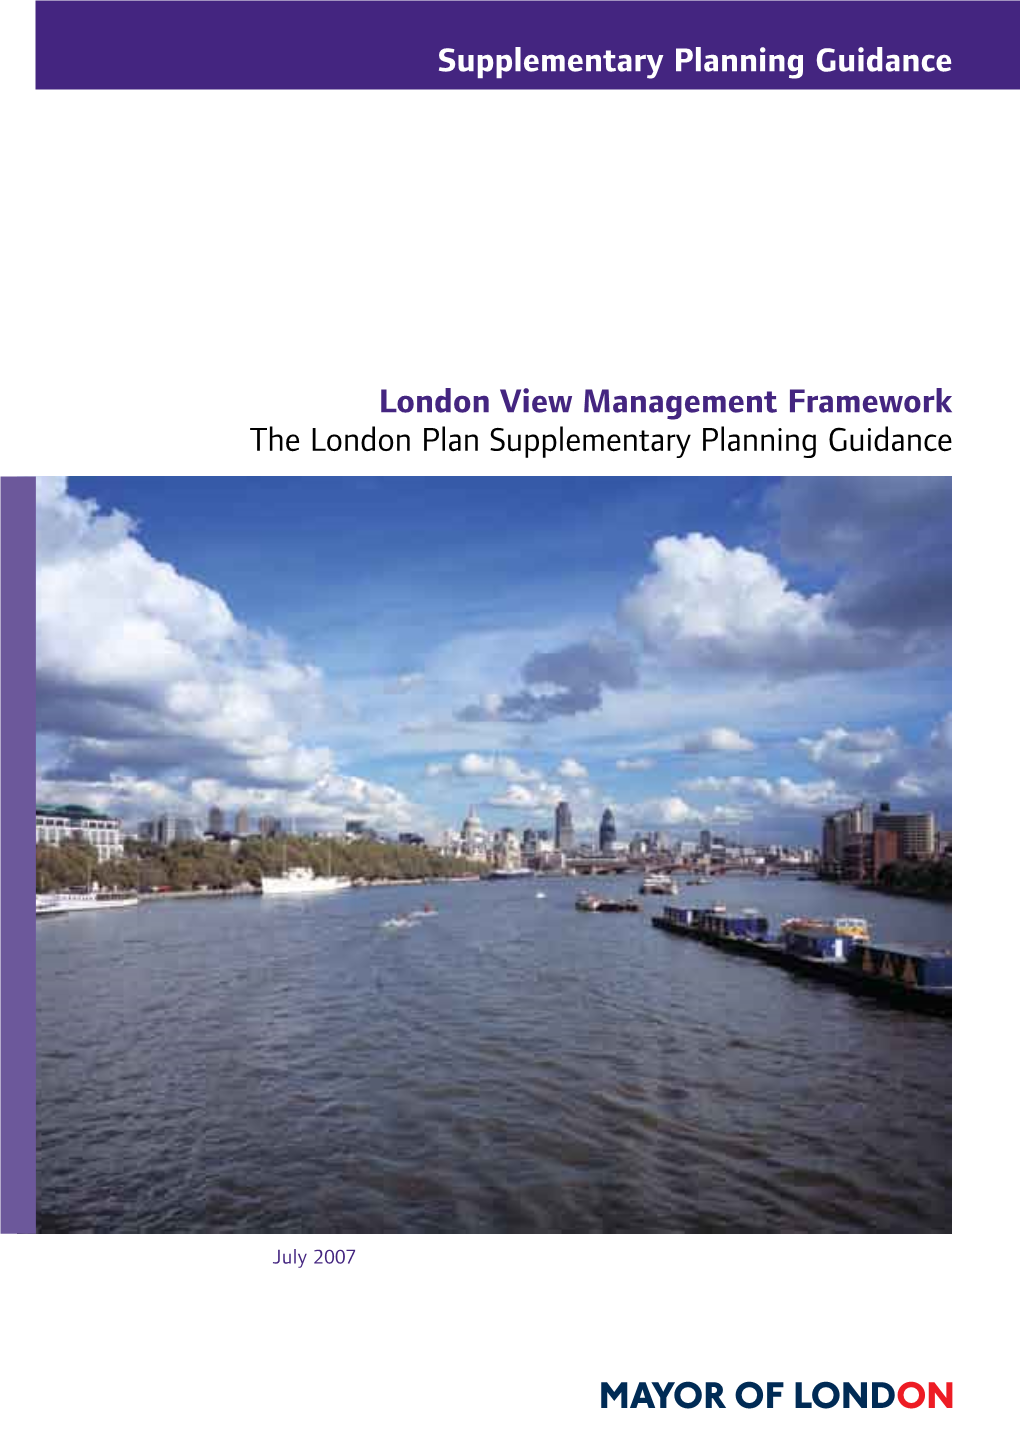 London View Management Framework SPG (2007)